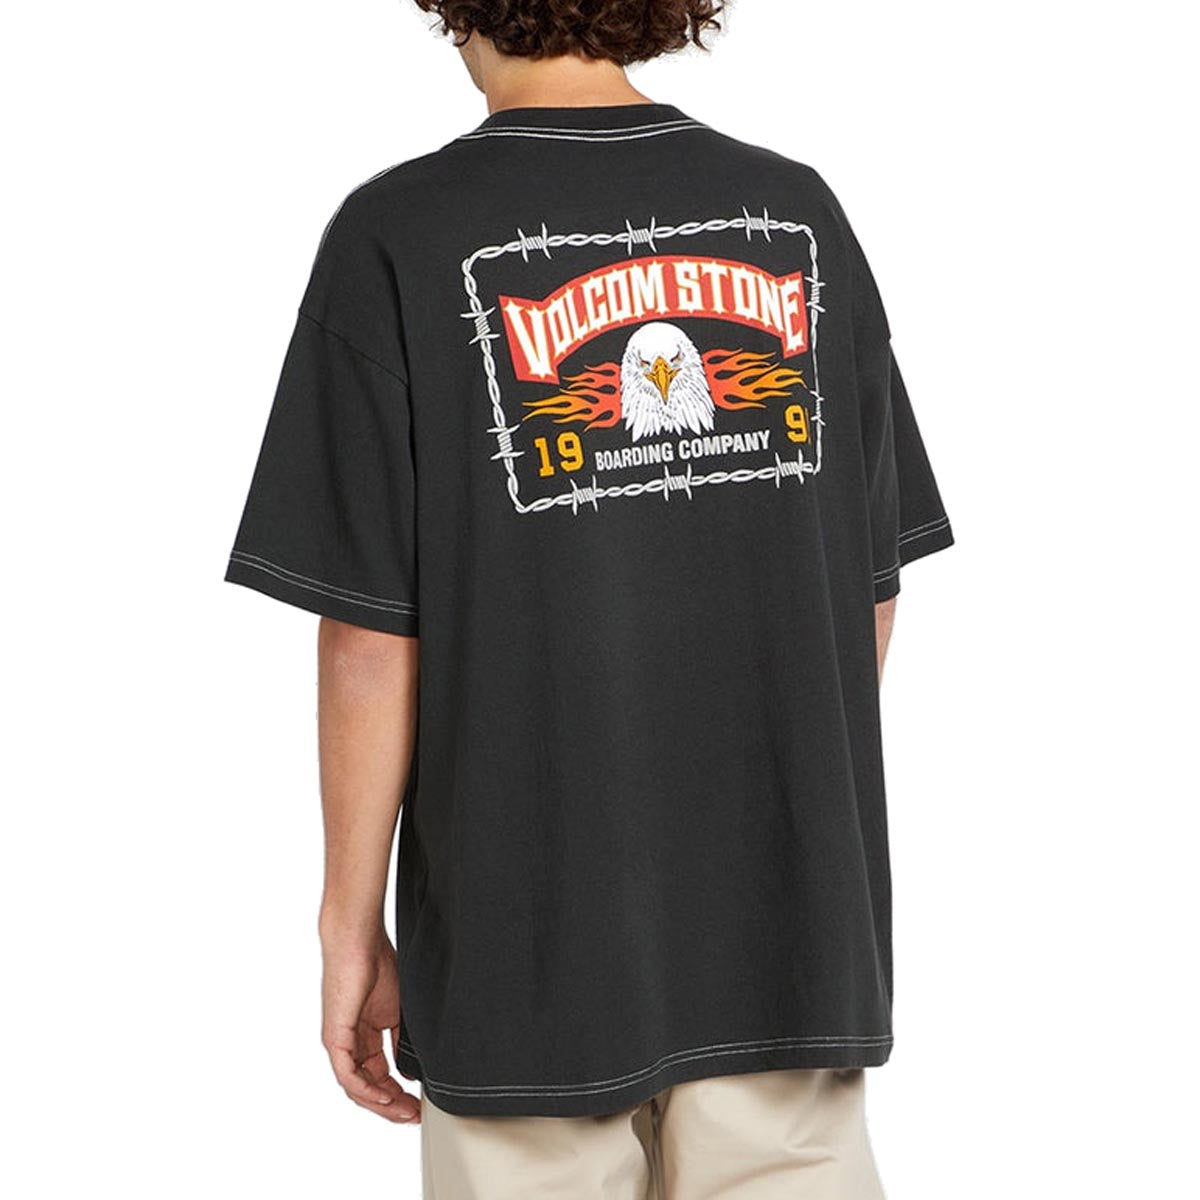 Volcom Barb Stone T-Shirt - Stealth image 3